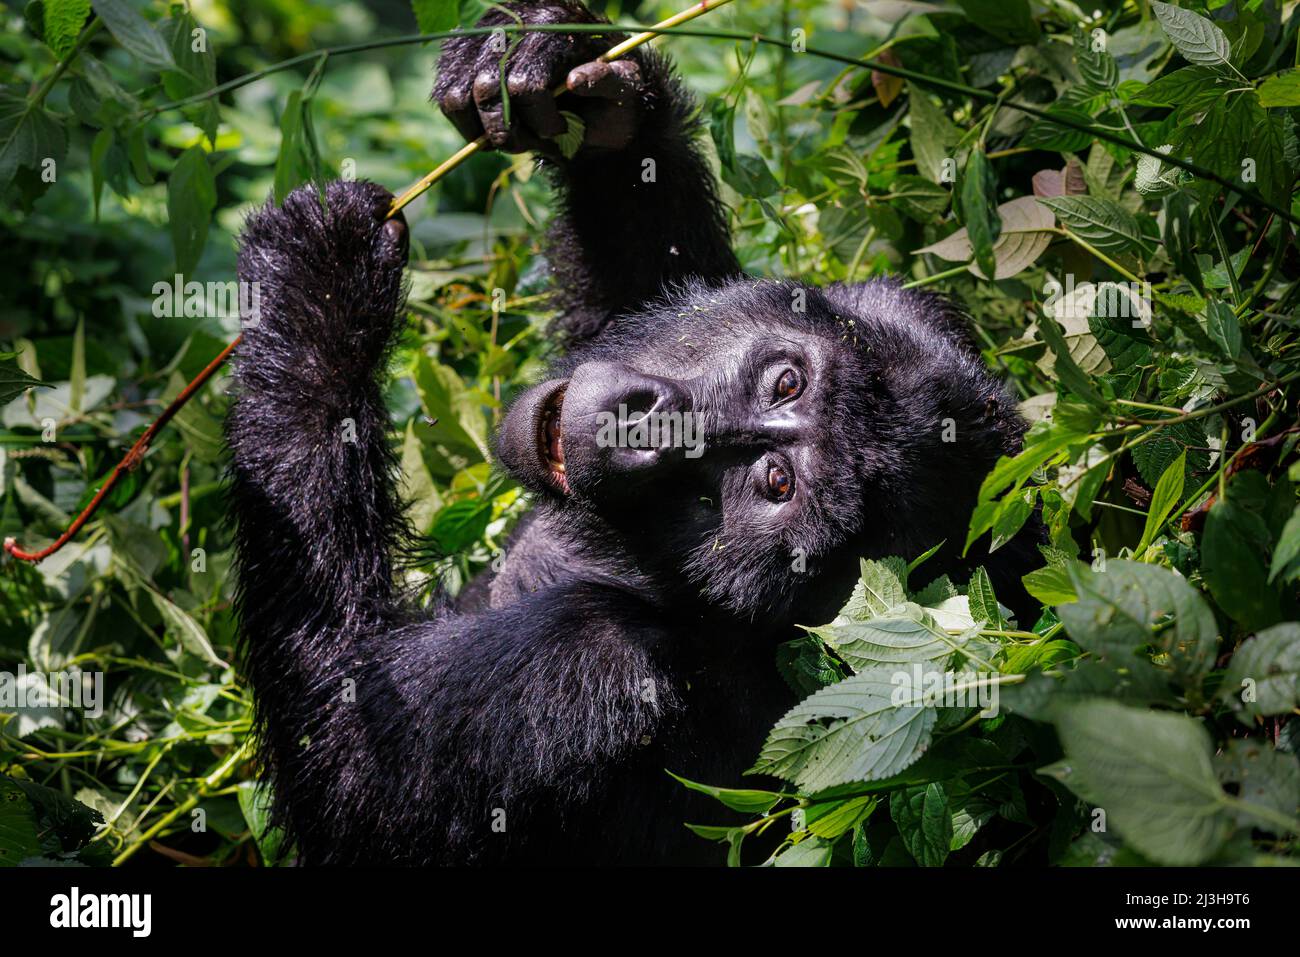 Uganda, Kanungu district, Ruhija, Bwindi impenetrable national Park listed as World Heritage by UNESCO, mountain gorilla Stock Photo